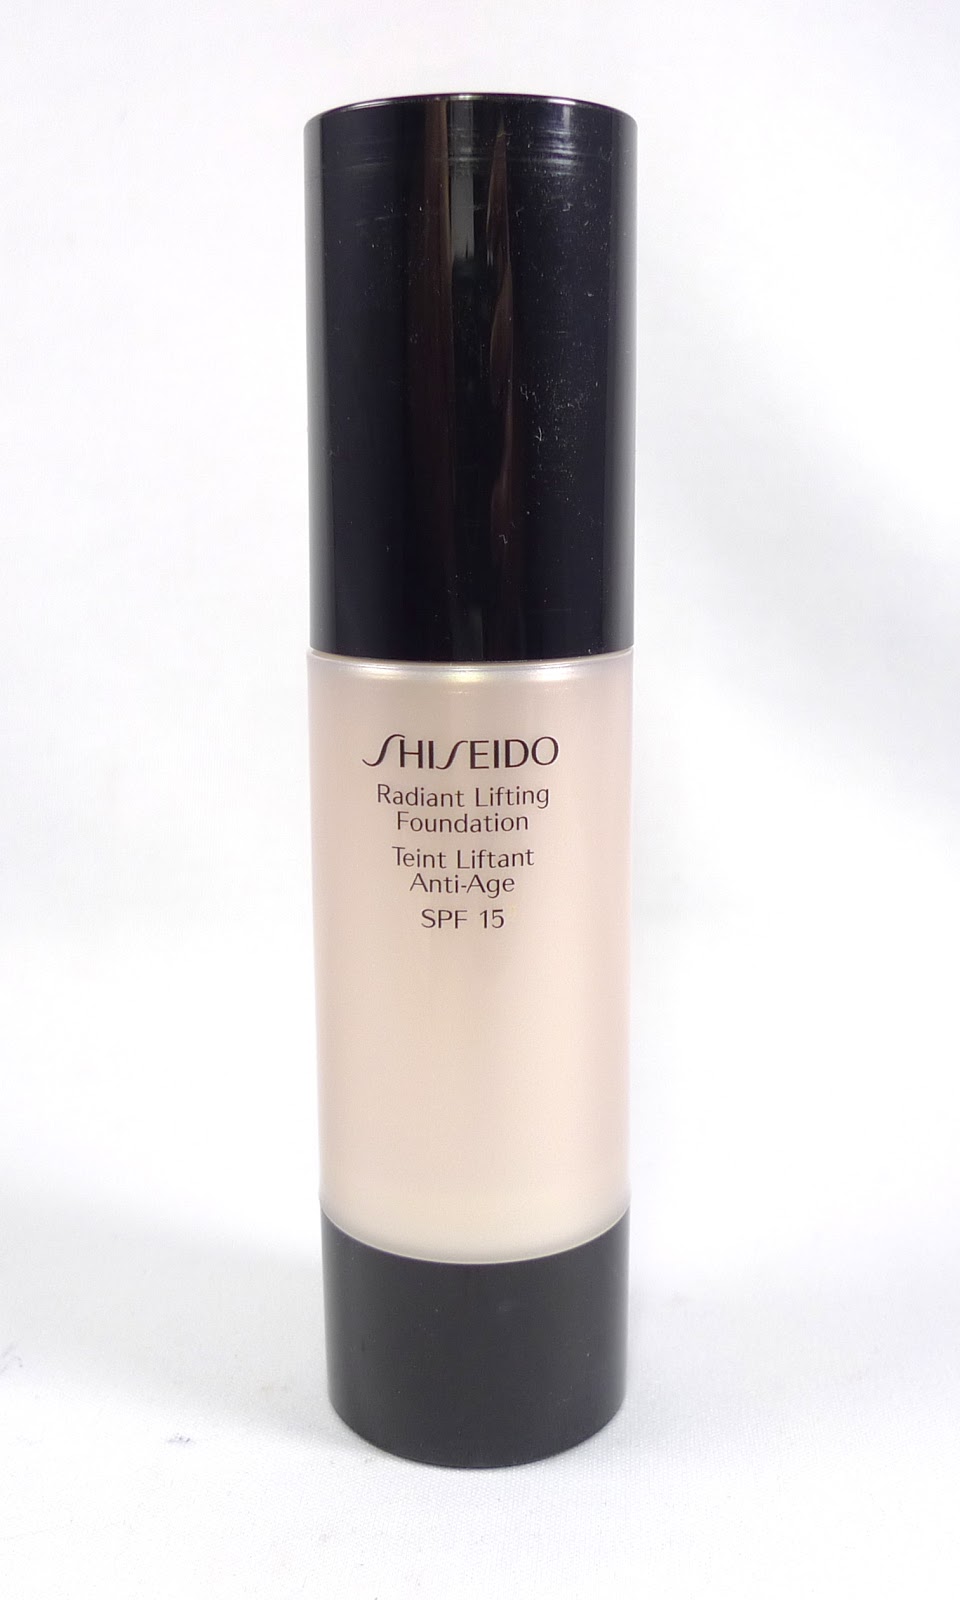 Shiseido synchro skin radiant. Шисейдо Radiant Lifting Foundation. Shiseido тональный крем Radiant Lifting Foundation, SPF 15. Шисейдо синхро скин тональный Радиант. Тональный крем Shiseido Radiant Lifting Foundation Teint liftant Anti-age SPF 20.